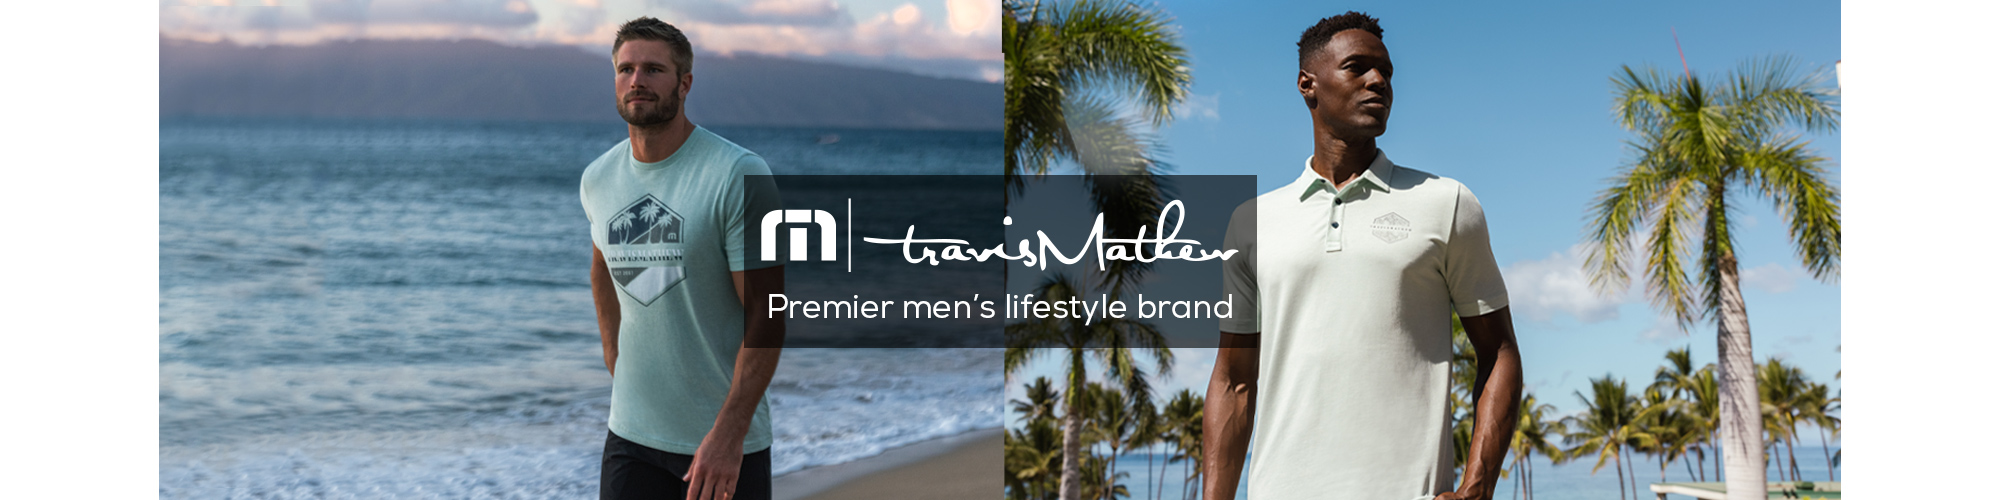 Travis Mathew Premier men's lifestyle brand